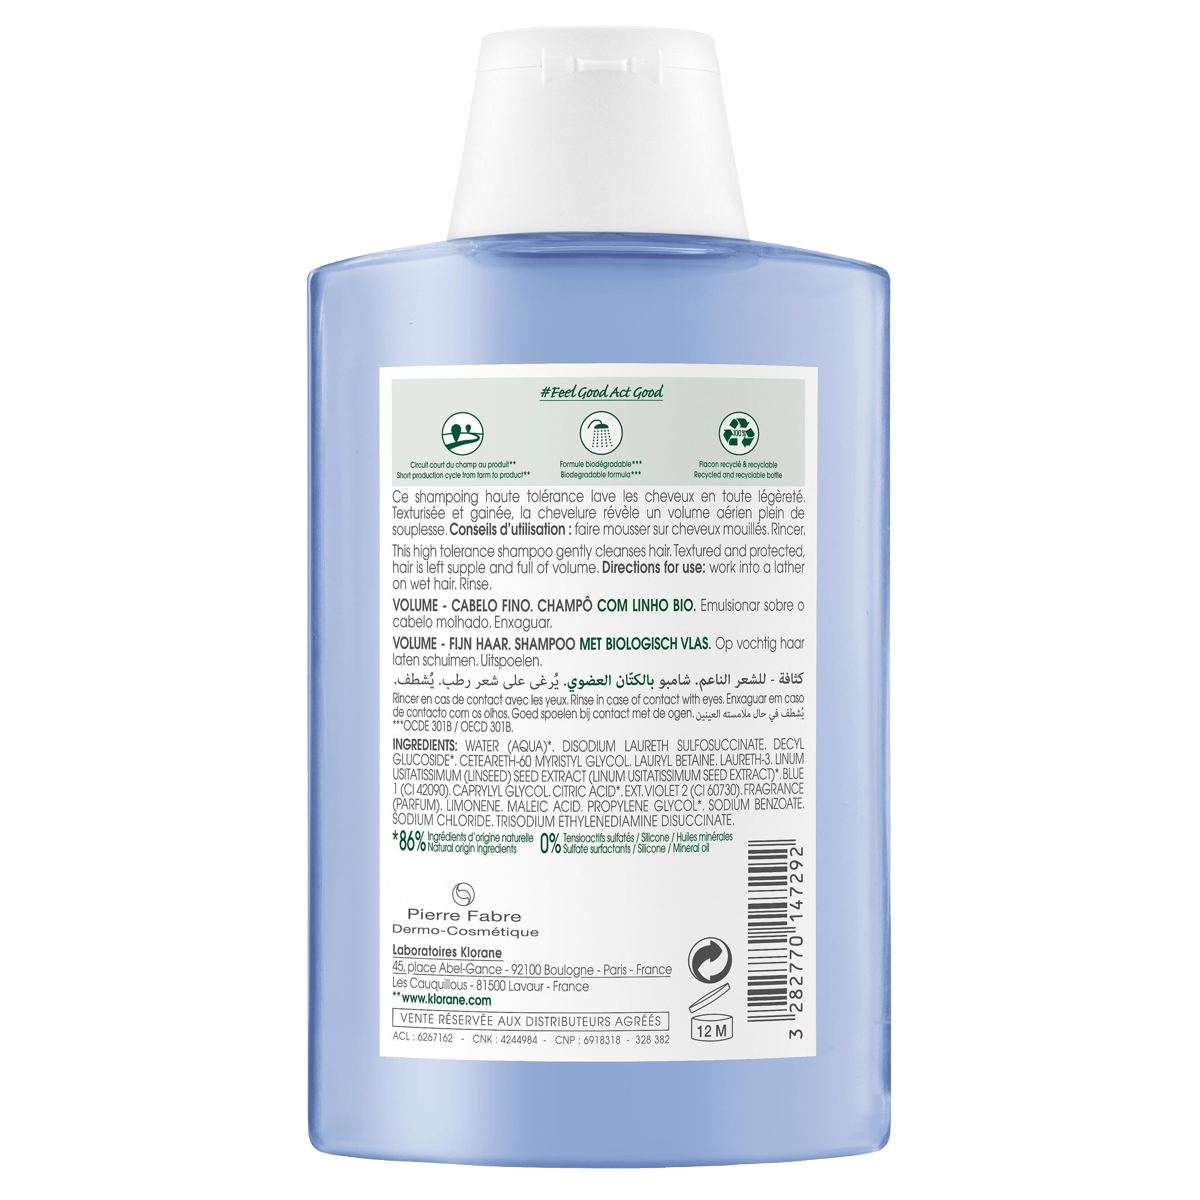 Klorane Leinen Bio Shampoo 200 ml